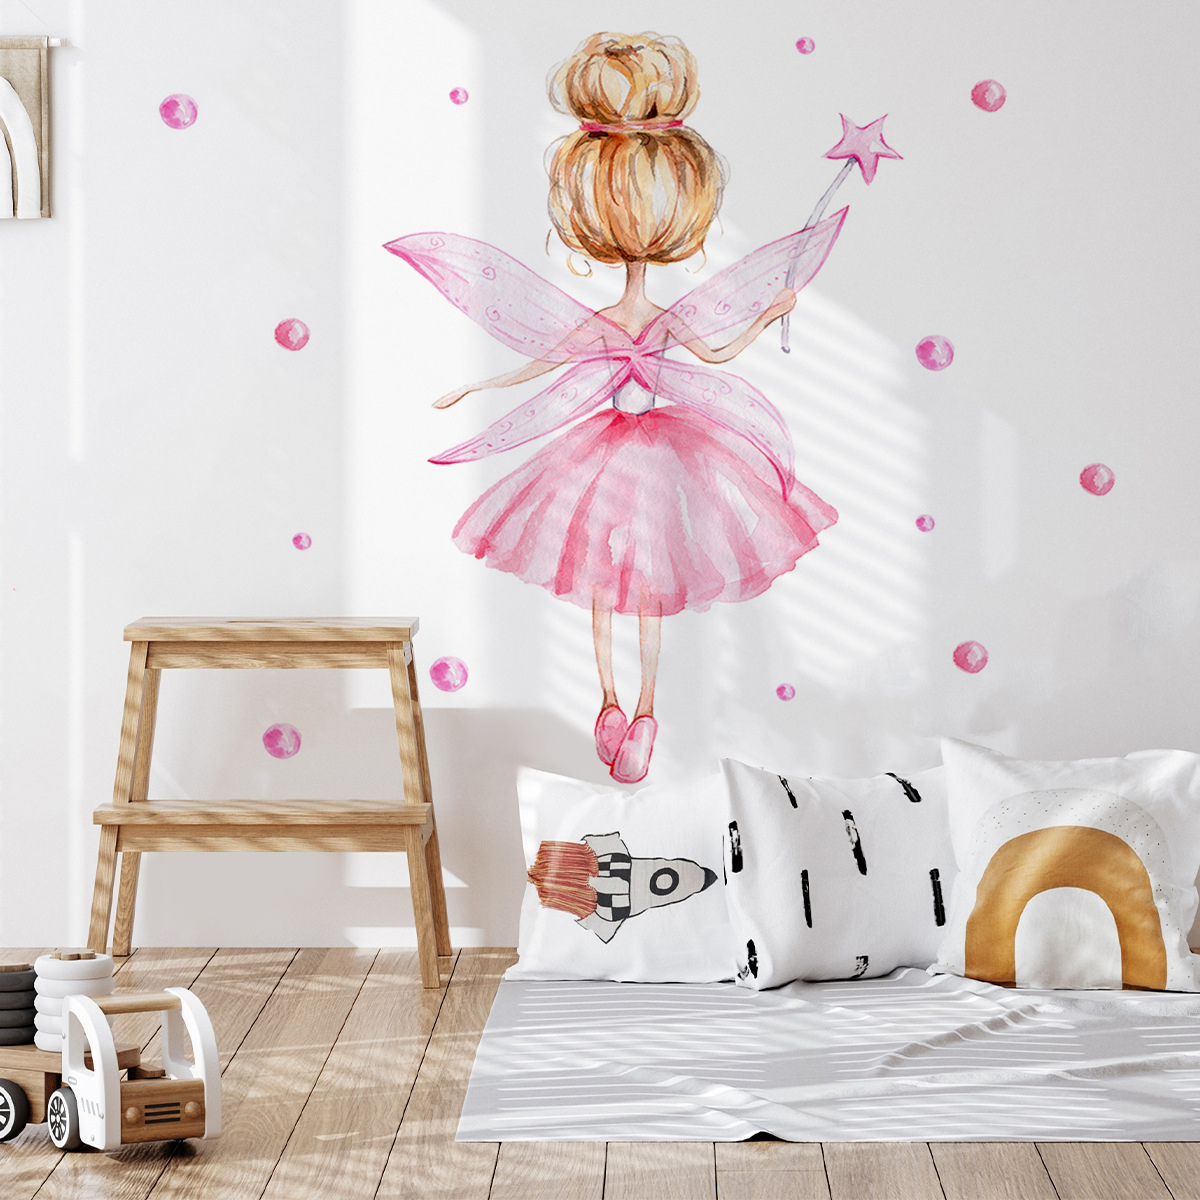 Fairy Ballerina Wall Stickers